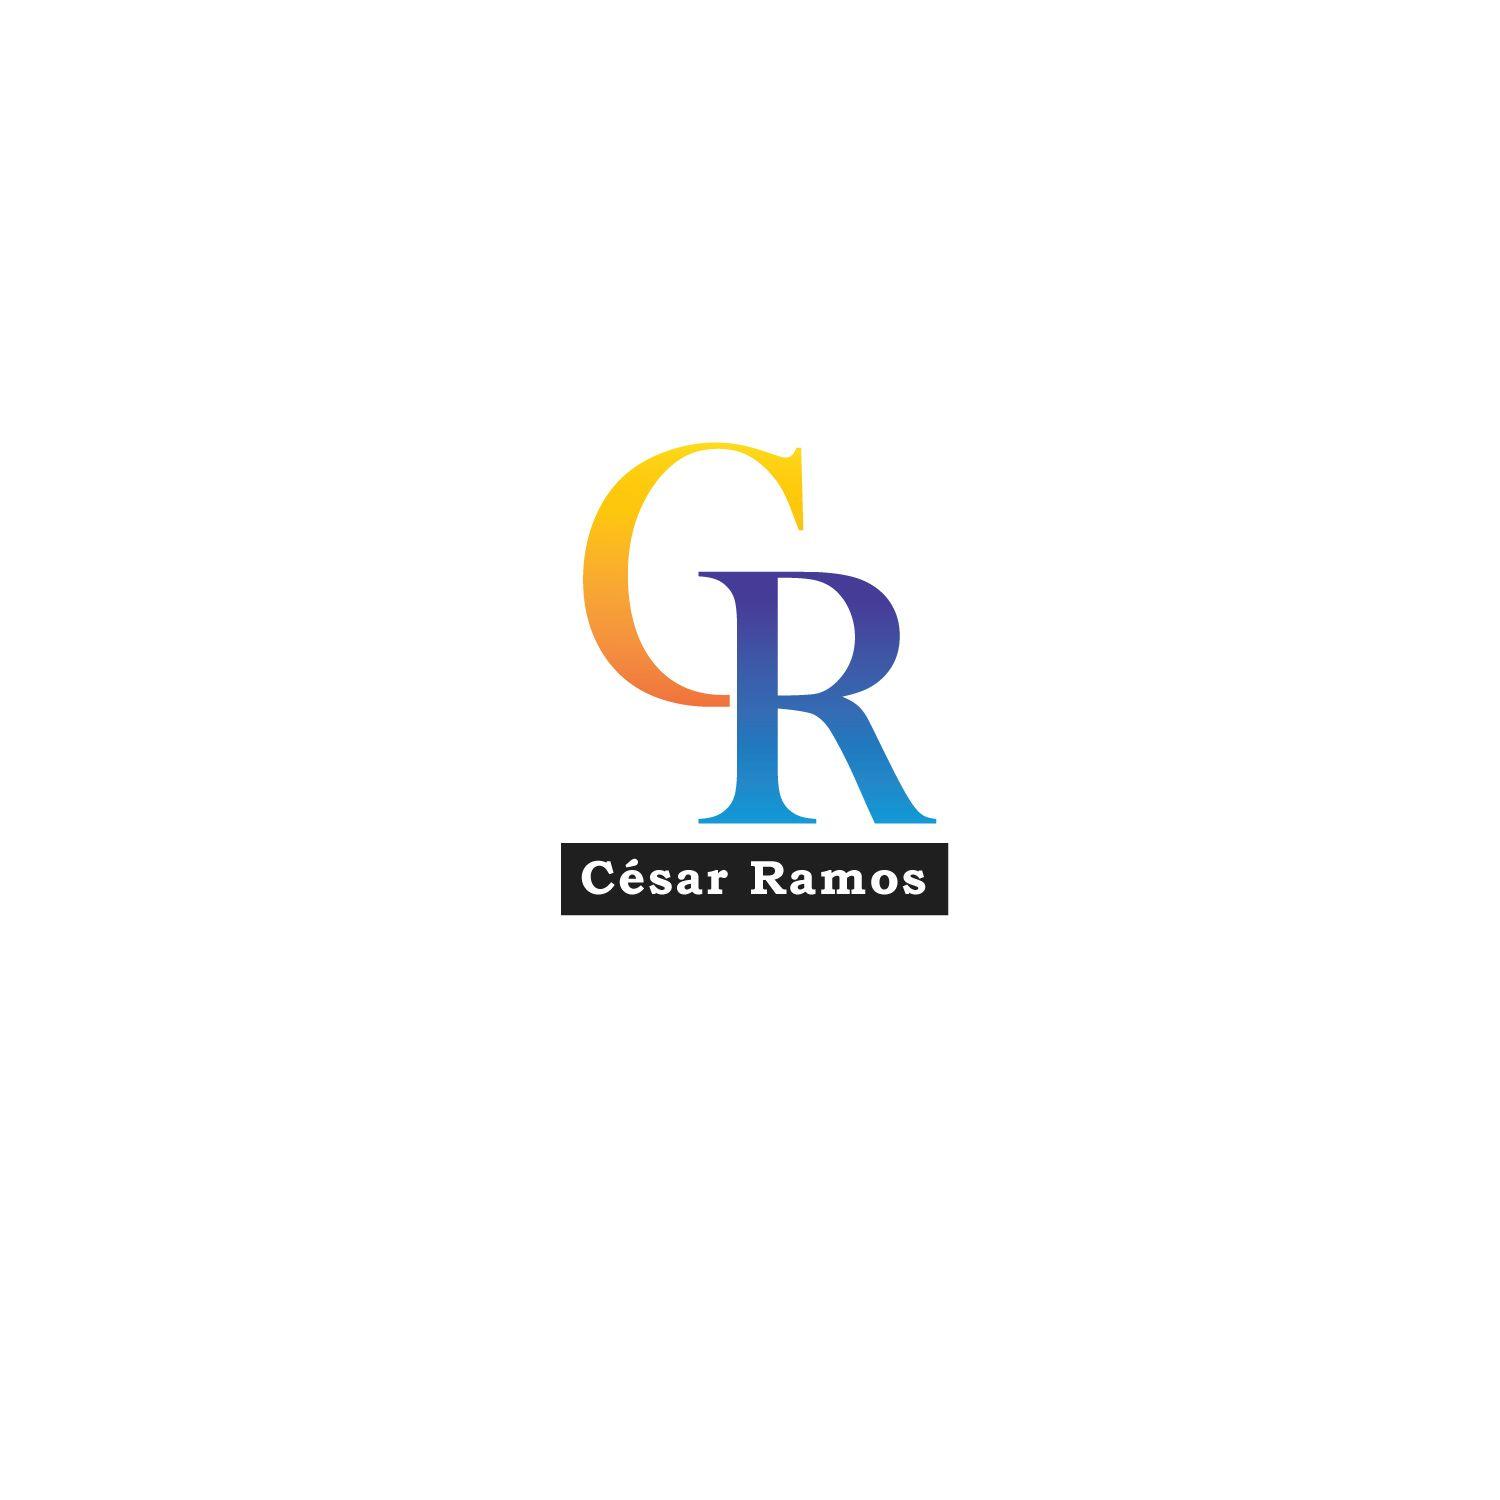 Ramos Logo - Serious, Modern, Business Management Logo Design for César Ramos